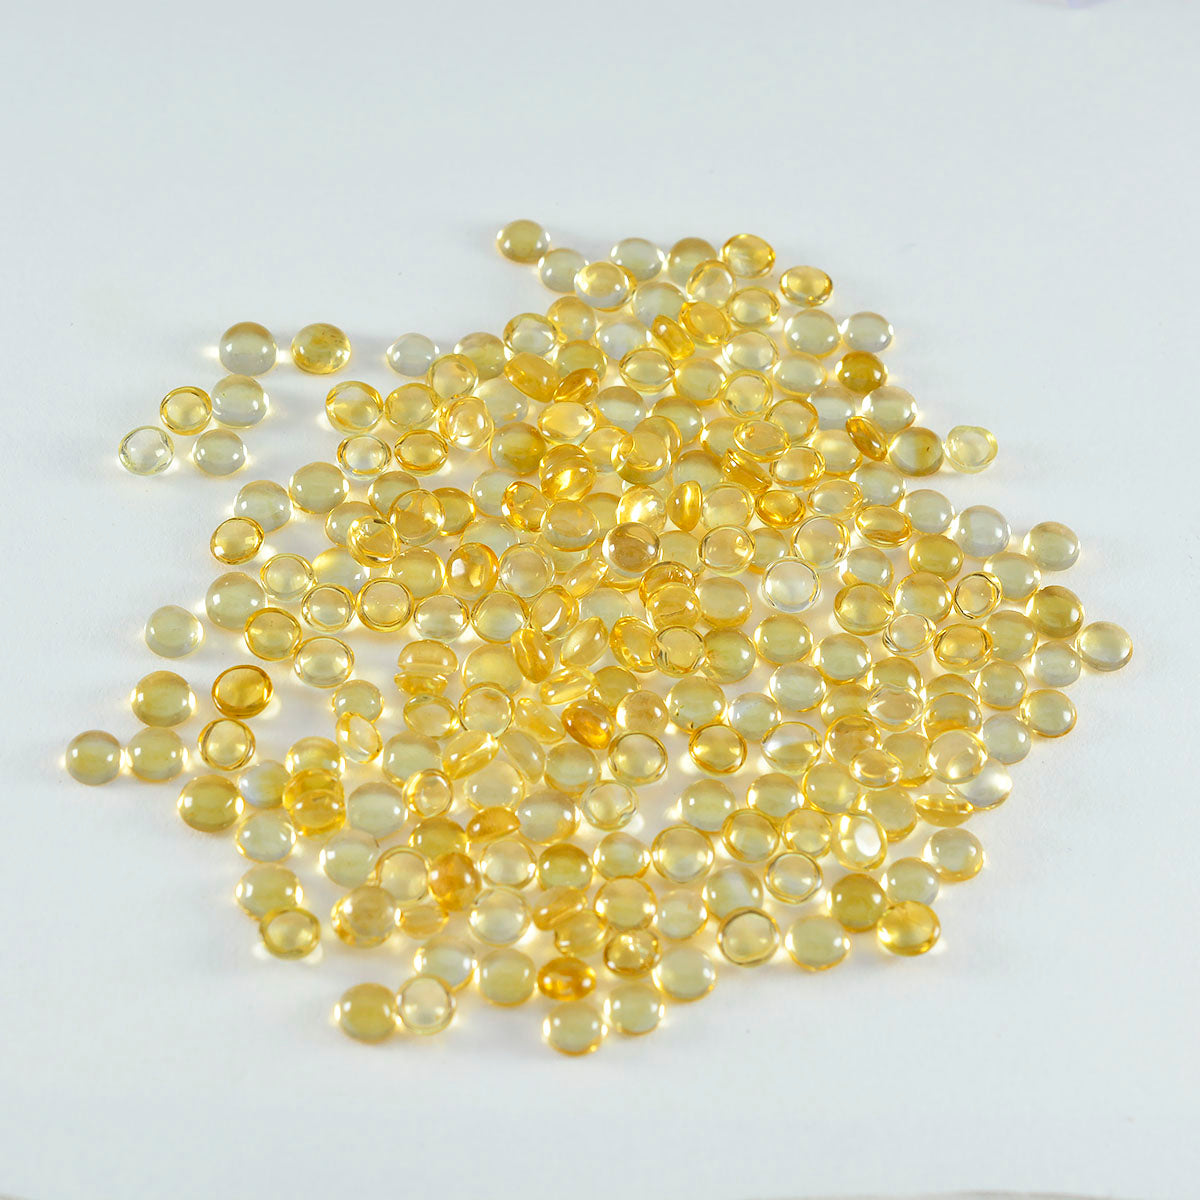 Riyogems 1PC gele citrien cabochon 3x3 mm ronde vorm knappe kwaliteit losse edelsteen